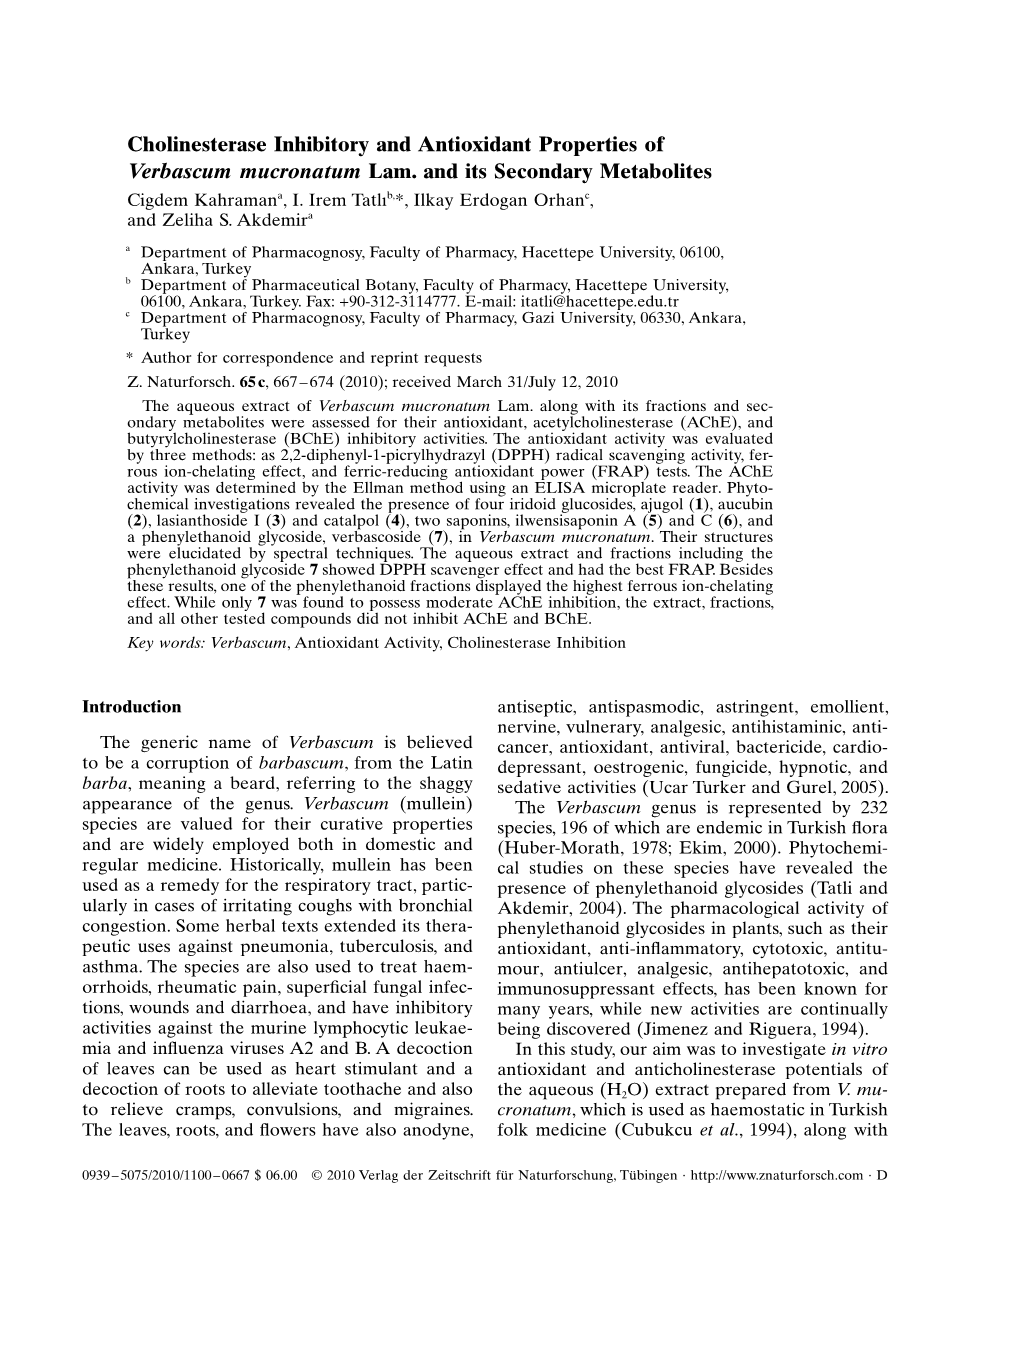 Cholinesterase Inhibitory and Antioxidant Properties of Verbascum Mucronatum Lam